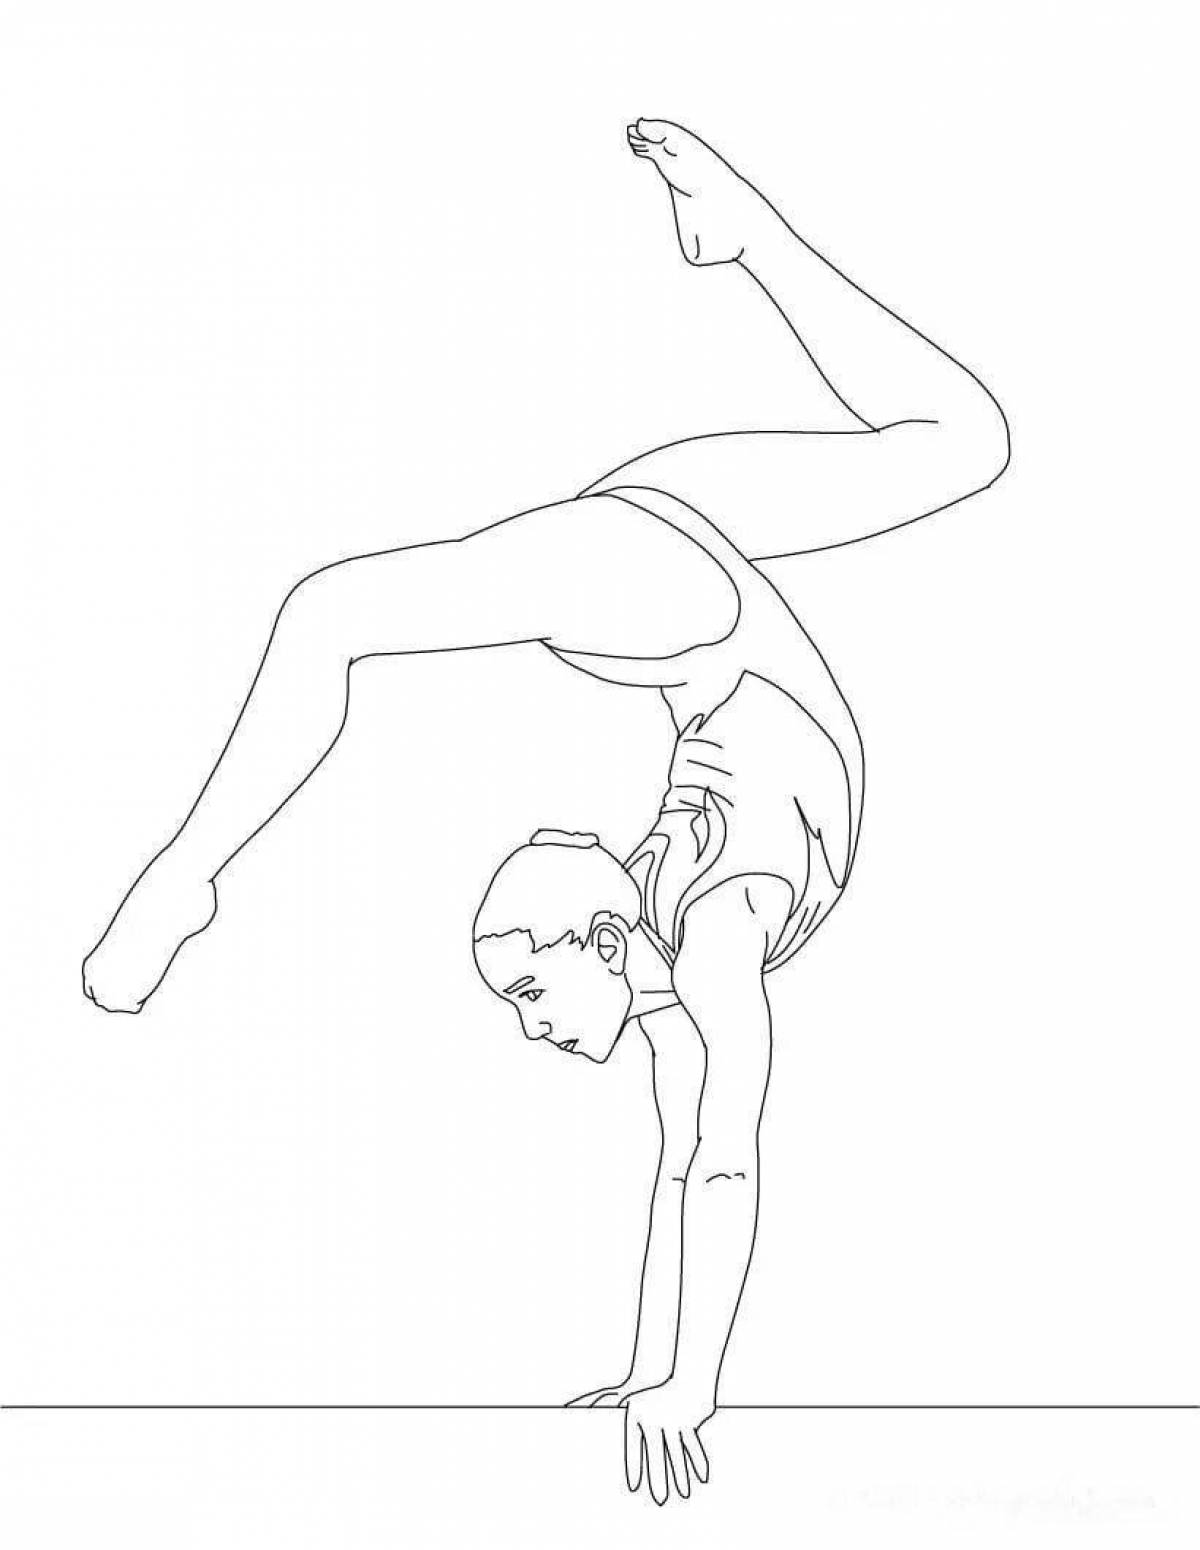 Animated gymnastics coloring page